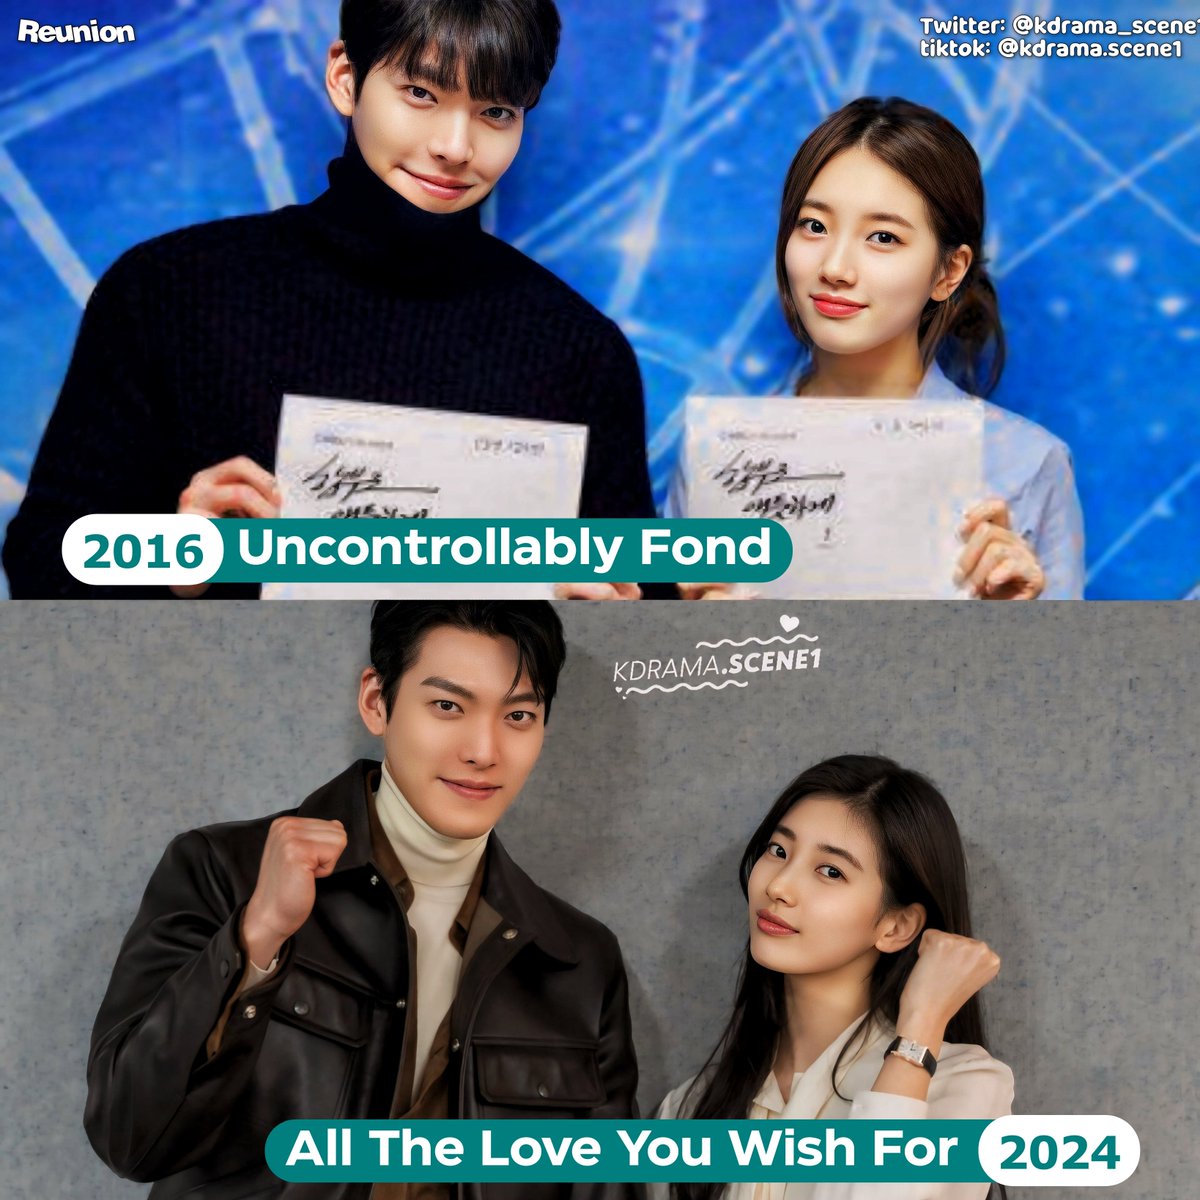 #UncontrollablyFond (2016) vs #AllTheLoveYouWishFor (2024)

#Suzy #KimWooBin